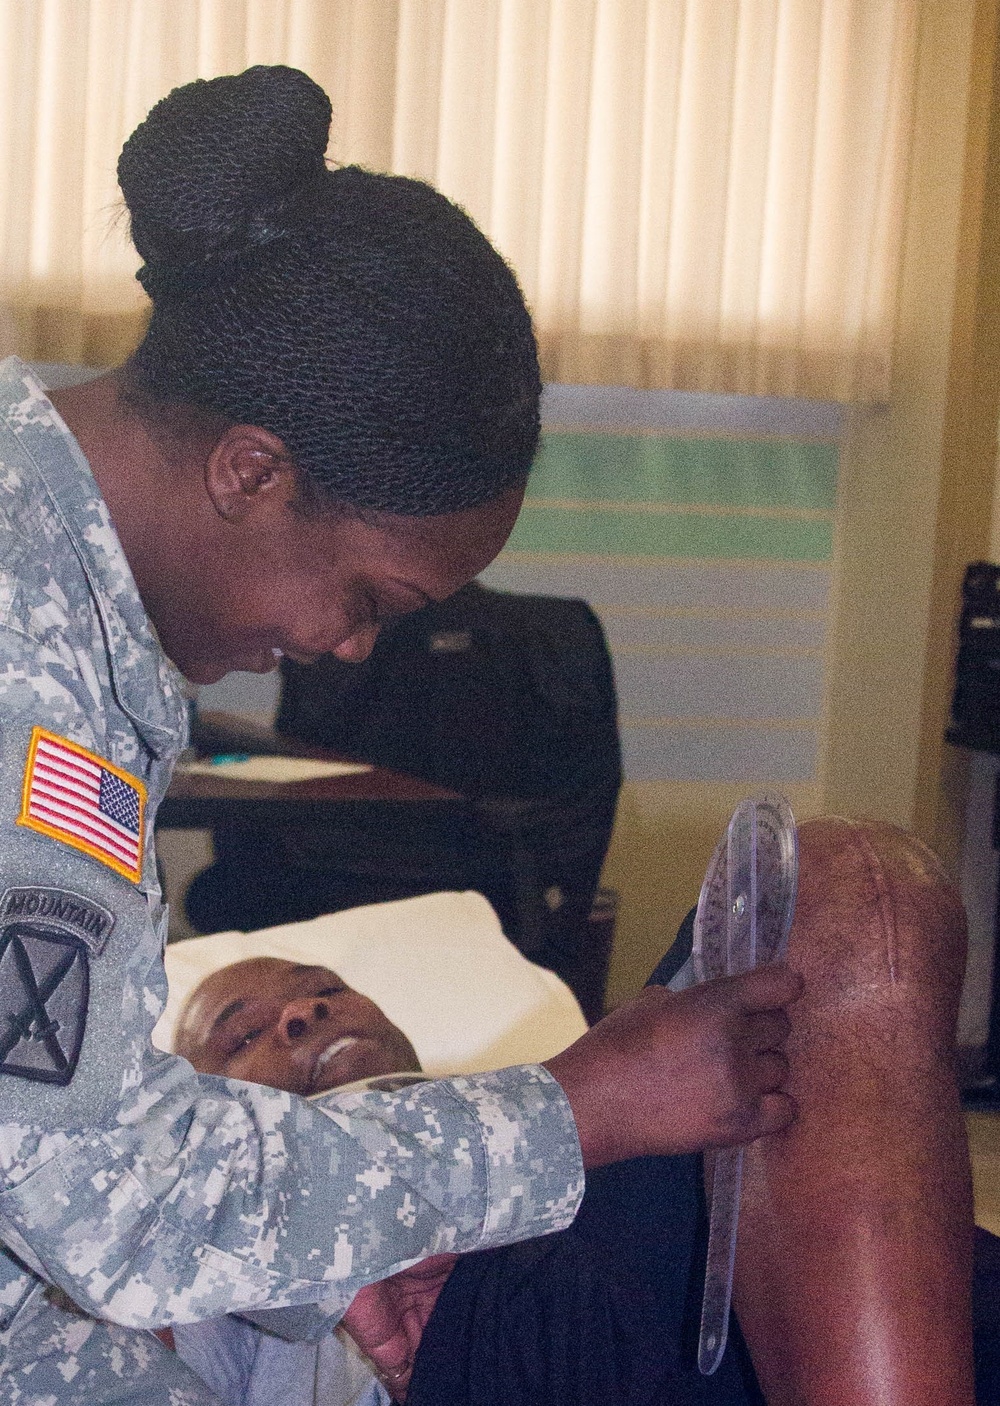 Madigan Soldier motivates patients through compassion, commitment